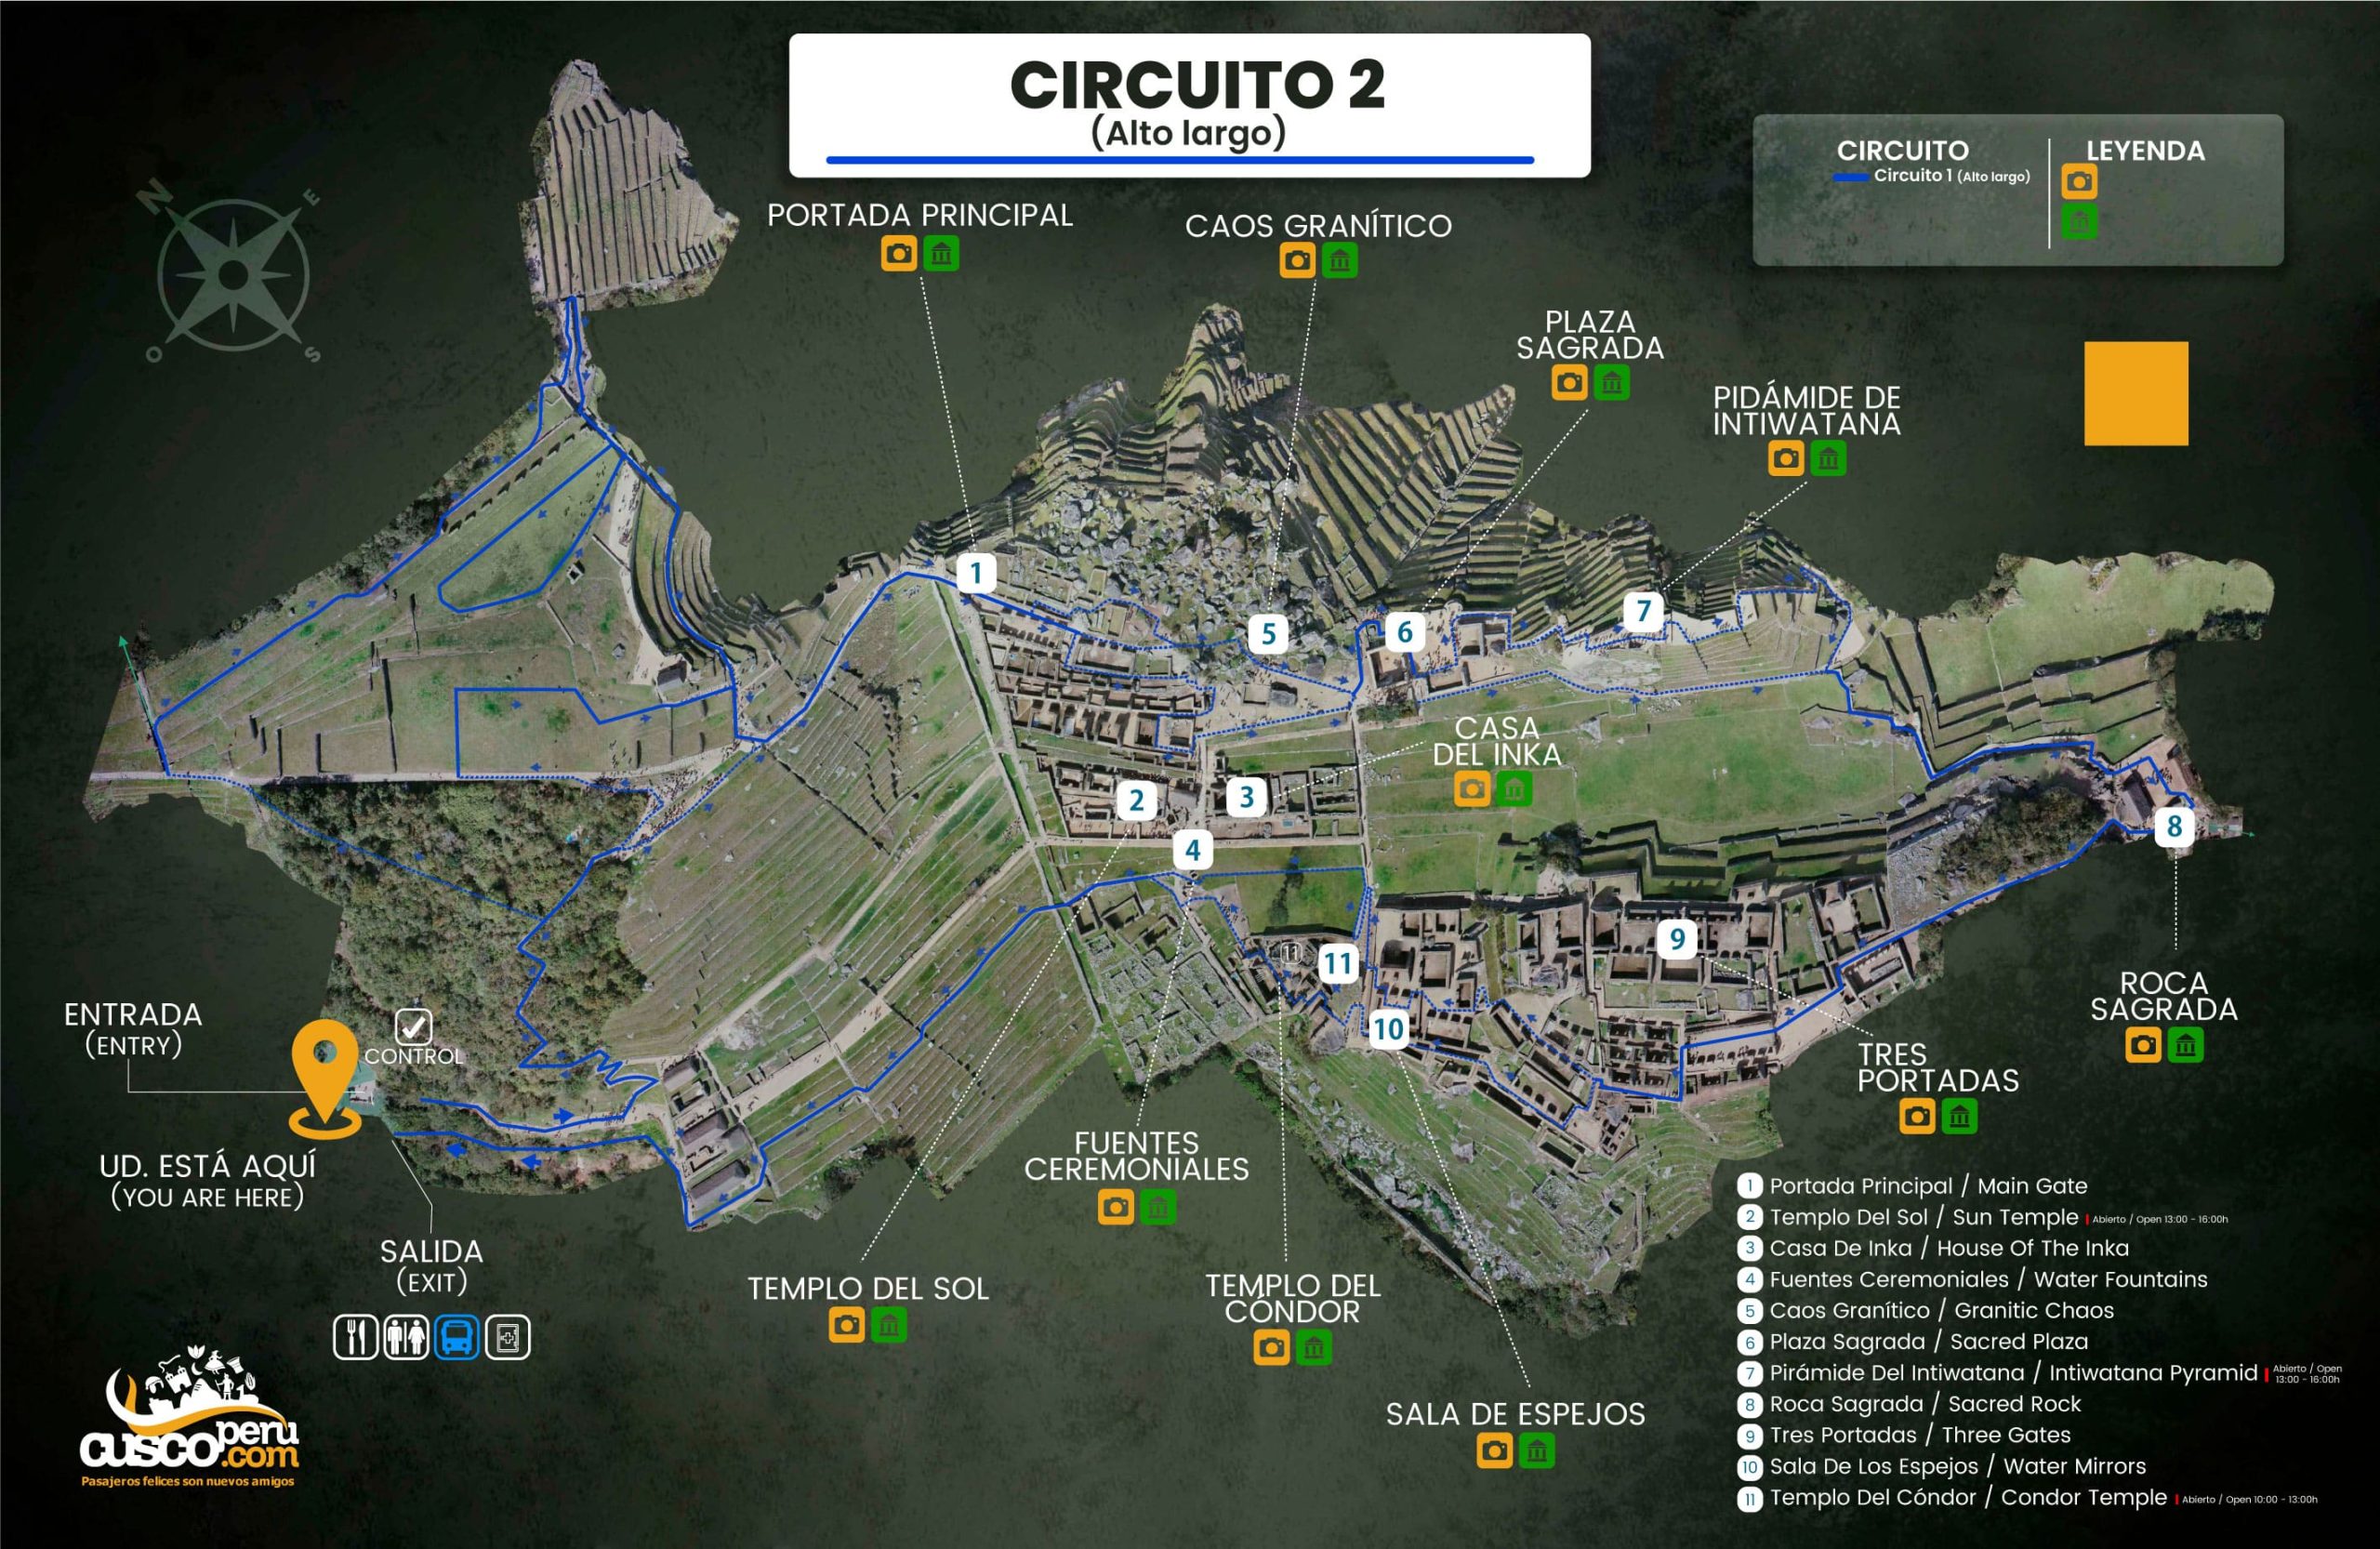 Mapa do Circuito 2 para Machu Picchu CuscoPeru.com